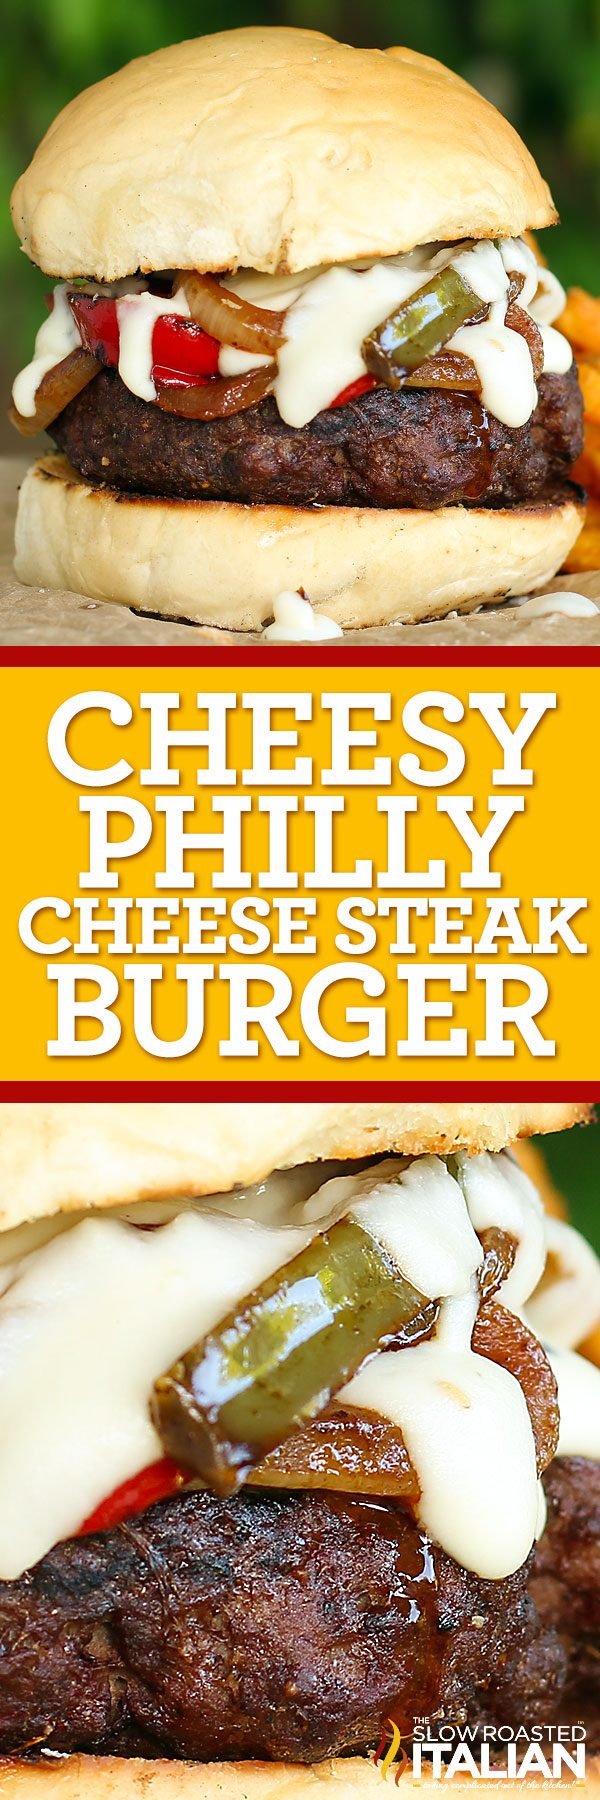 cheesy-philly-cheese-steak-burger-pin-1907318